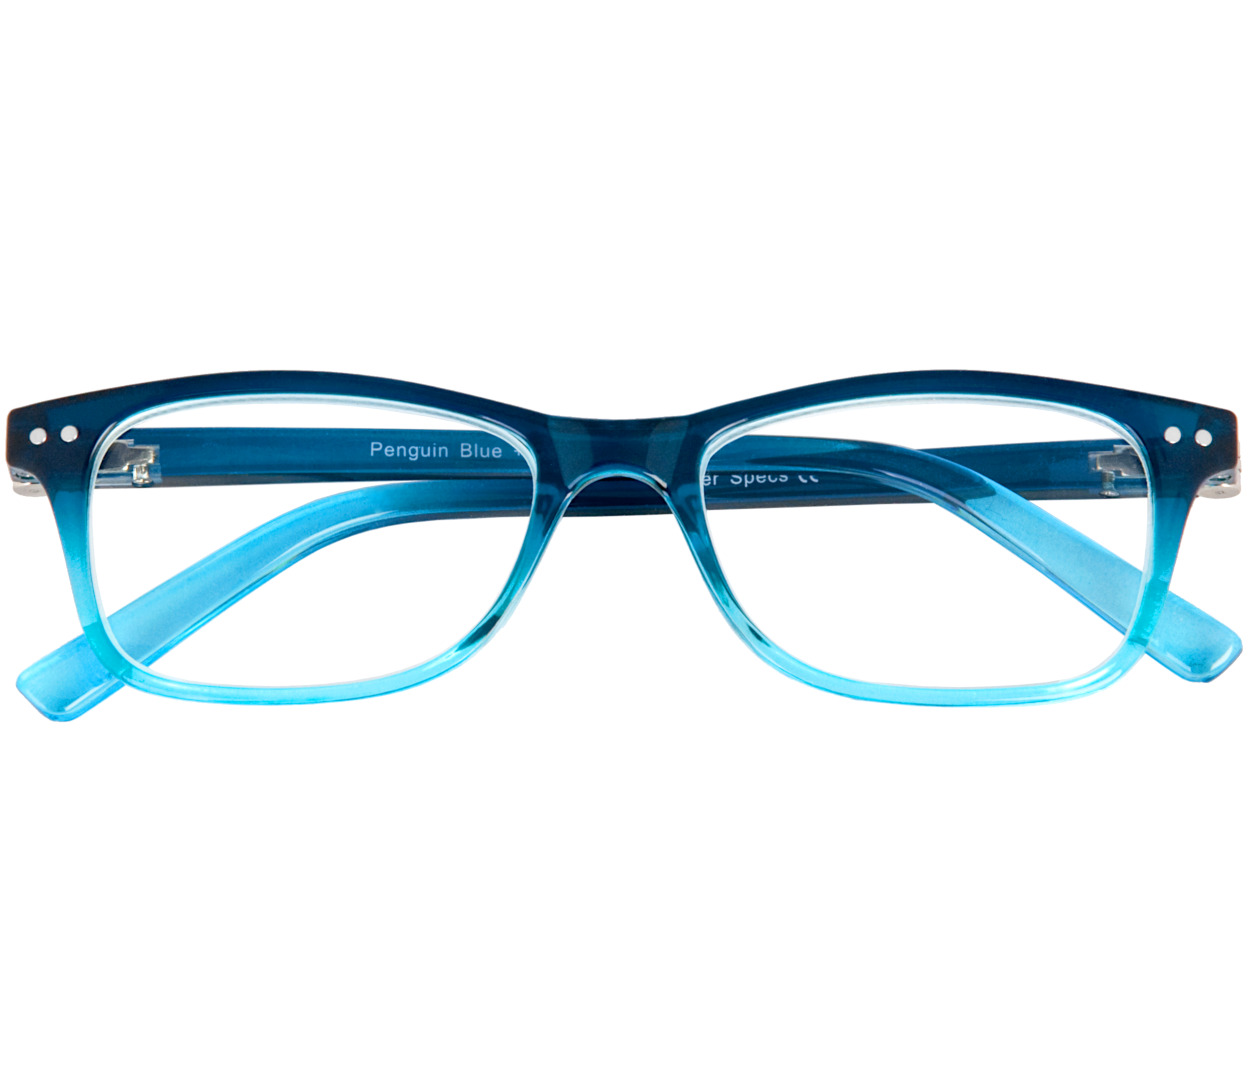 Penguin (Blue) Reading Glasses - Tiger Specs